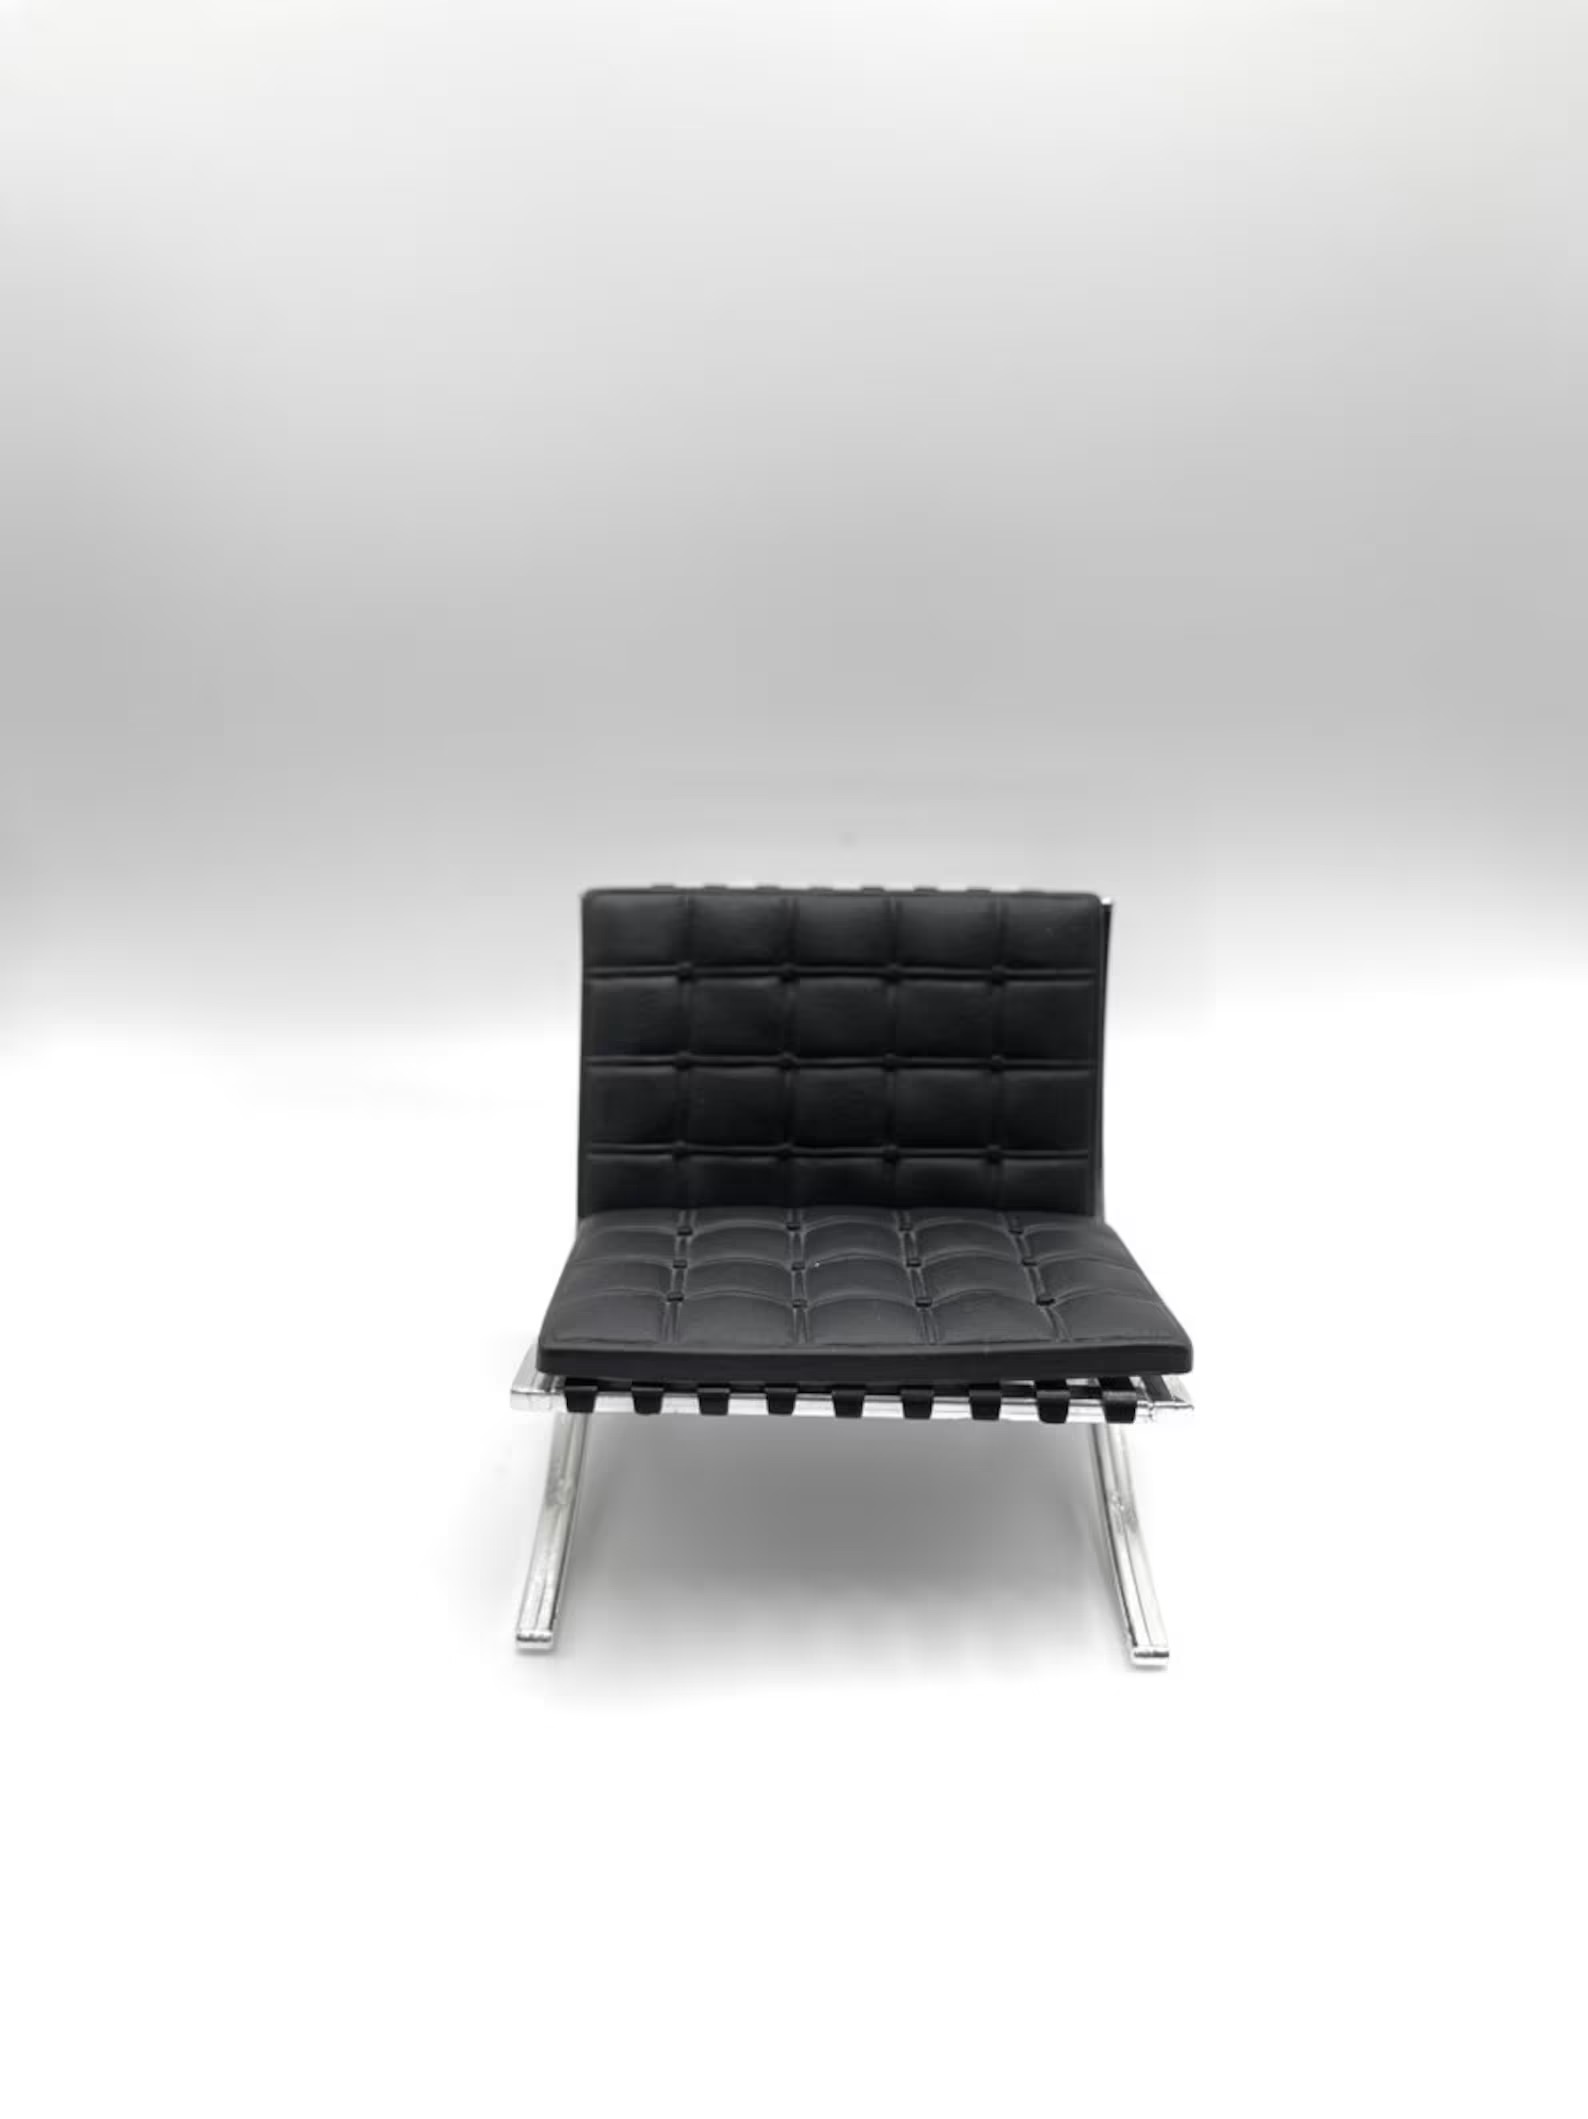 Barcelona Chair Desk Display Model - Image 3 of 5